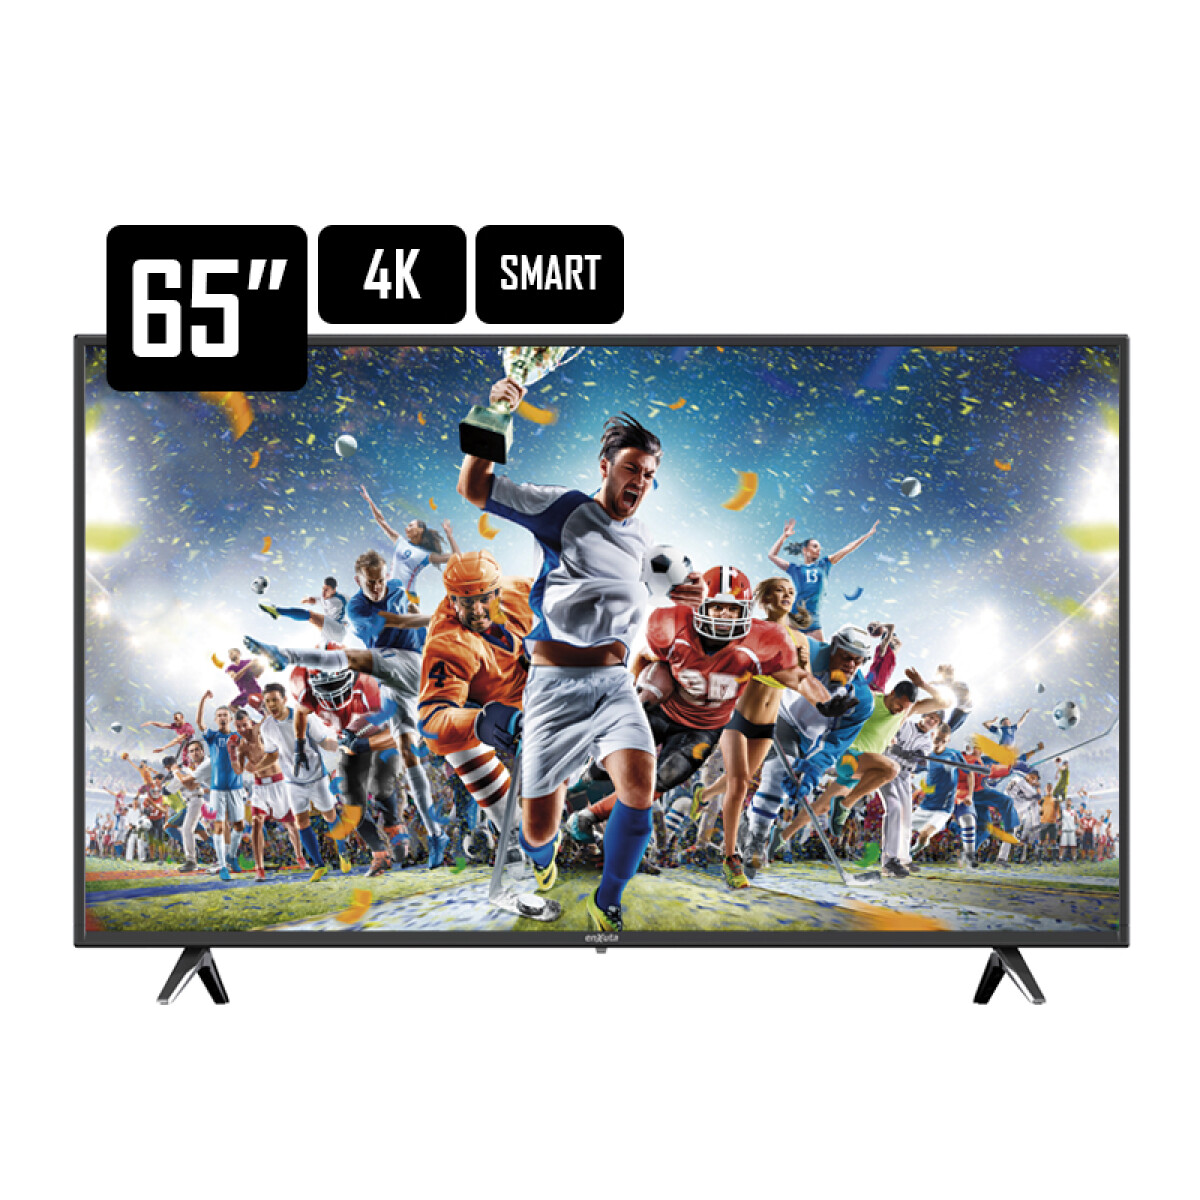 Tv Led Enxuta 65" Smart tv 4K ultra hd - Unica 